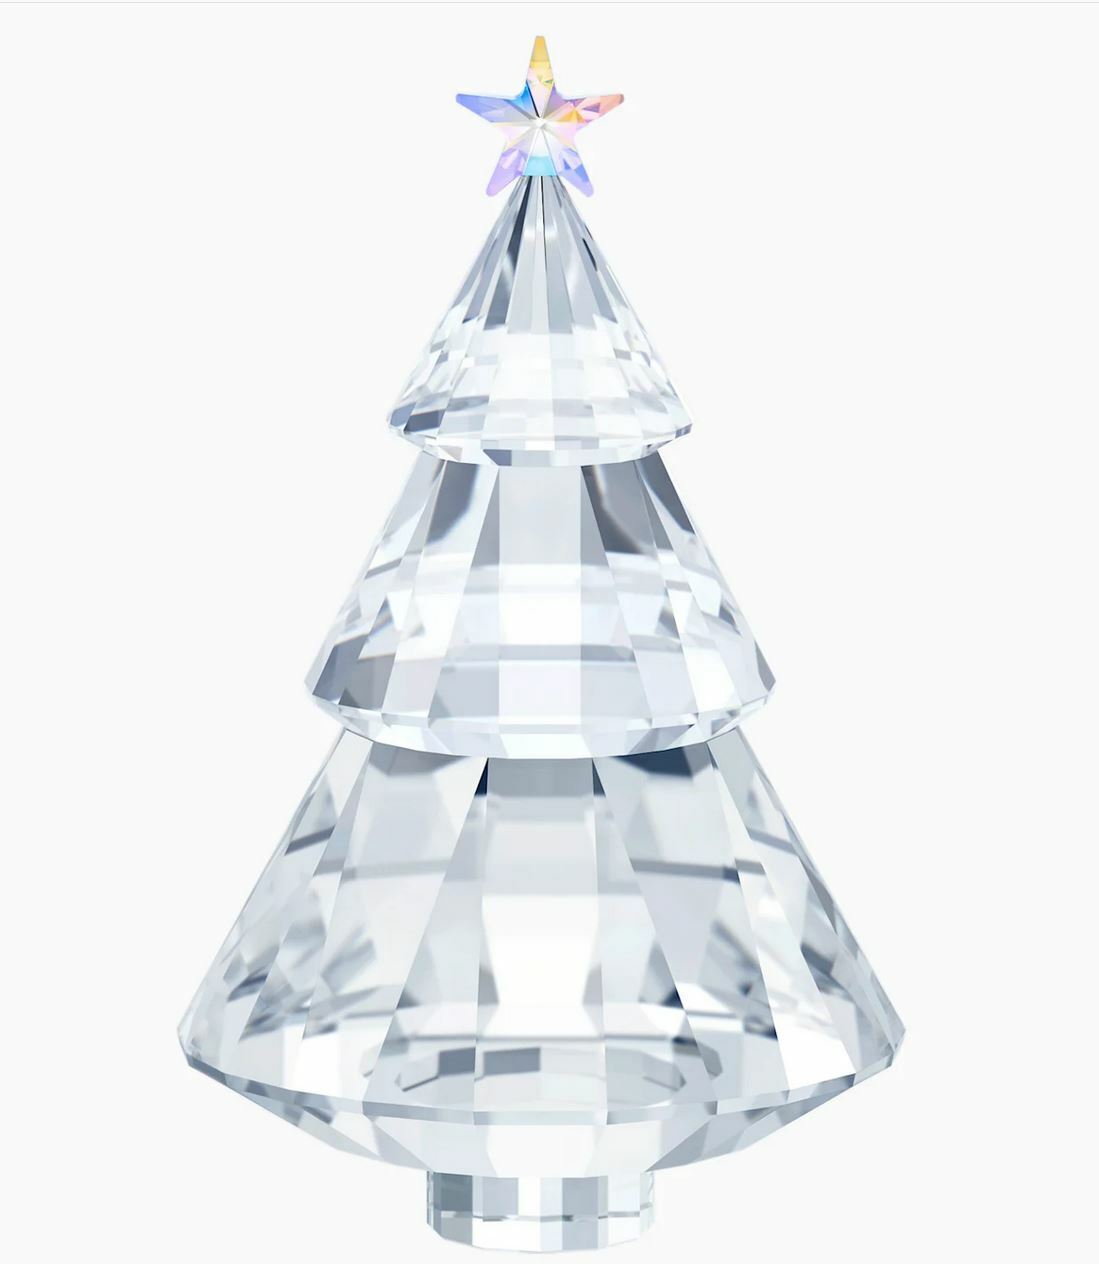 Swarovski Christmas Tree Clear Crystal AB Star #5286388 New in Box $399